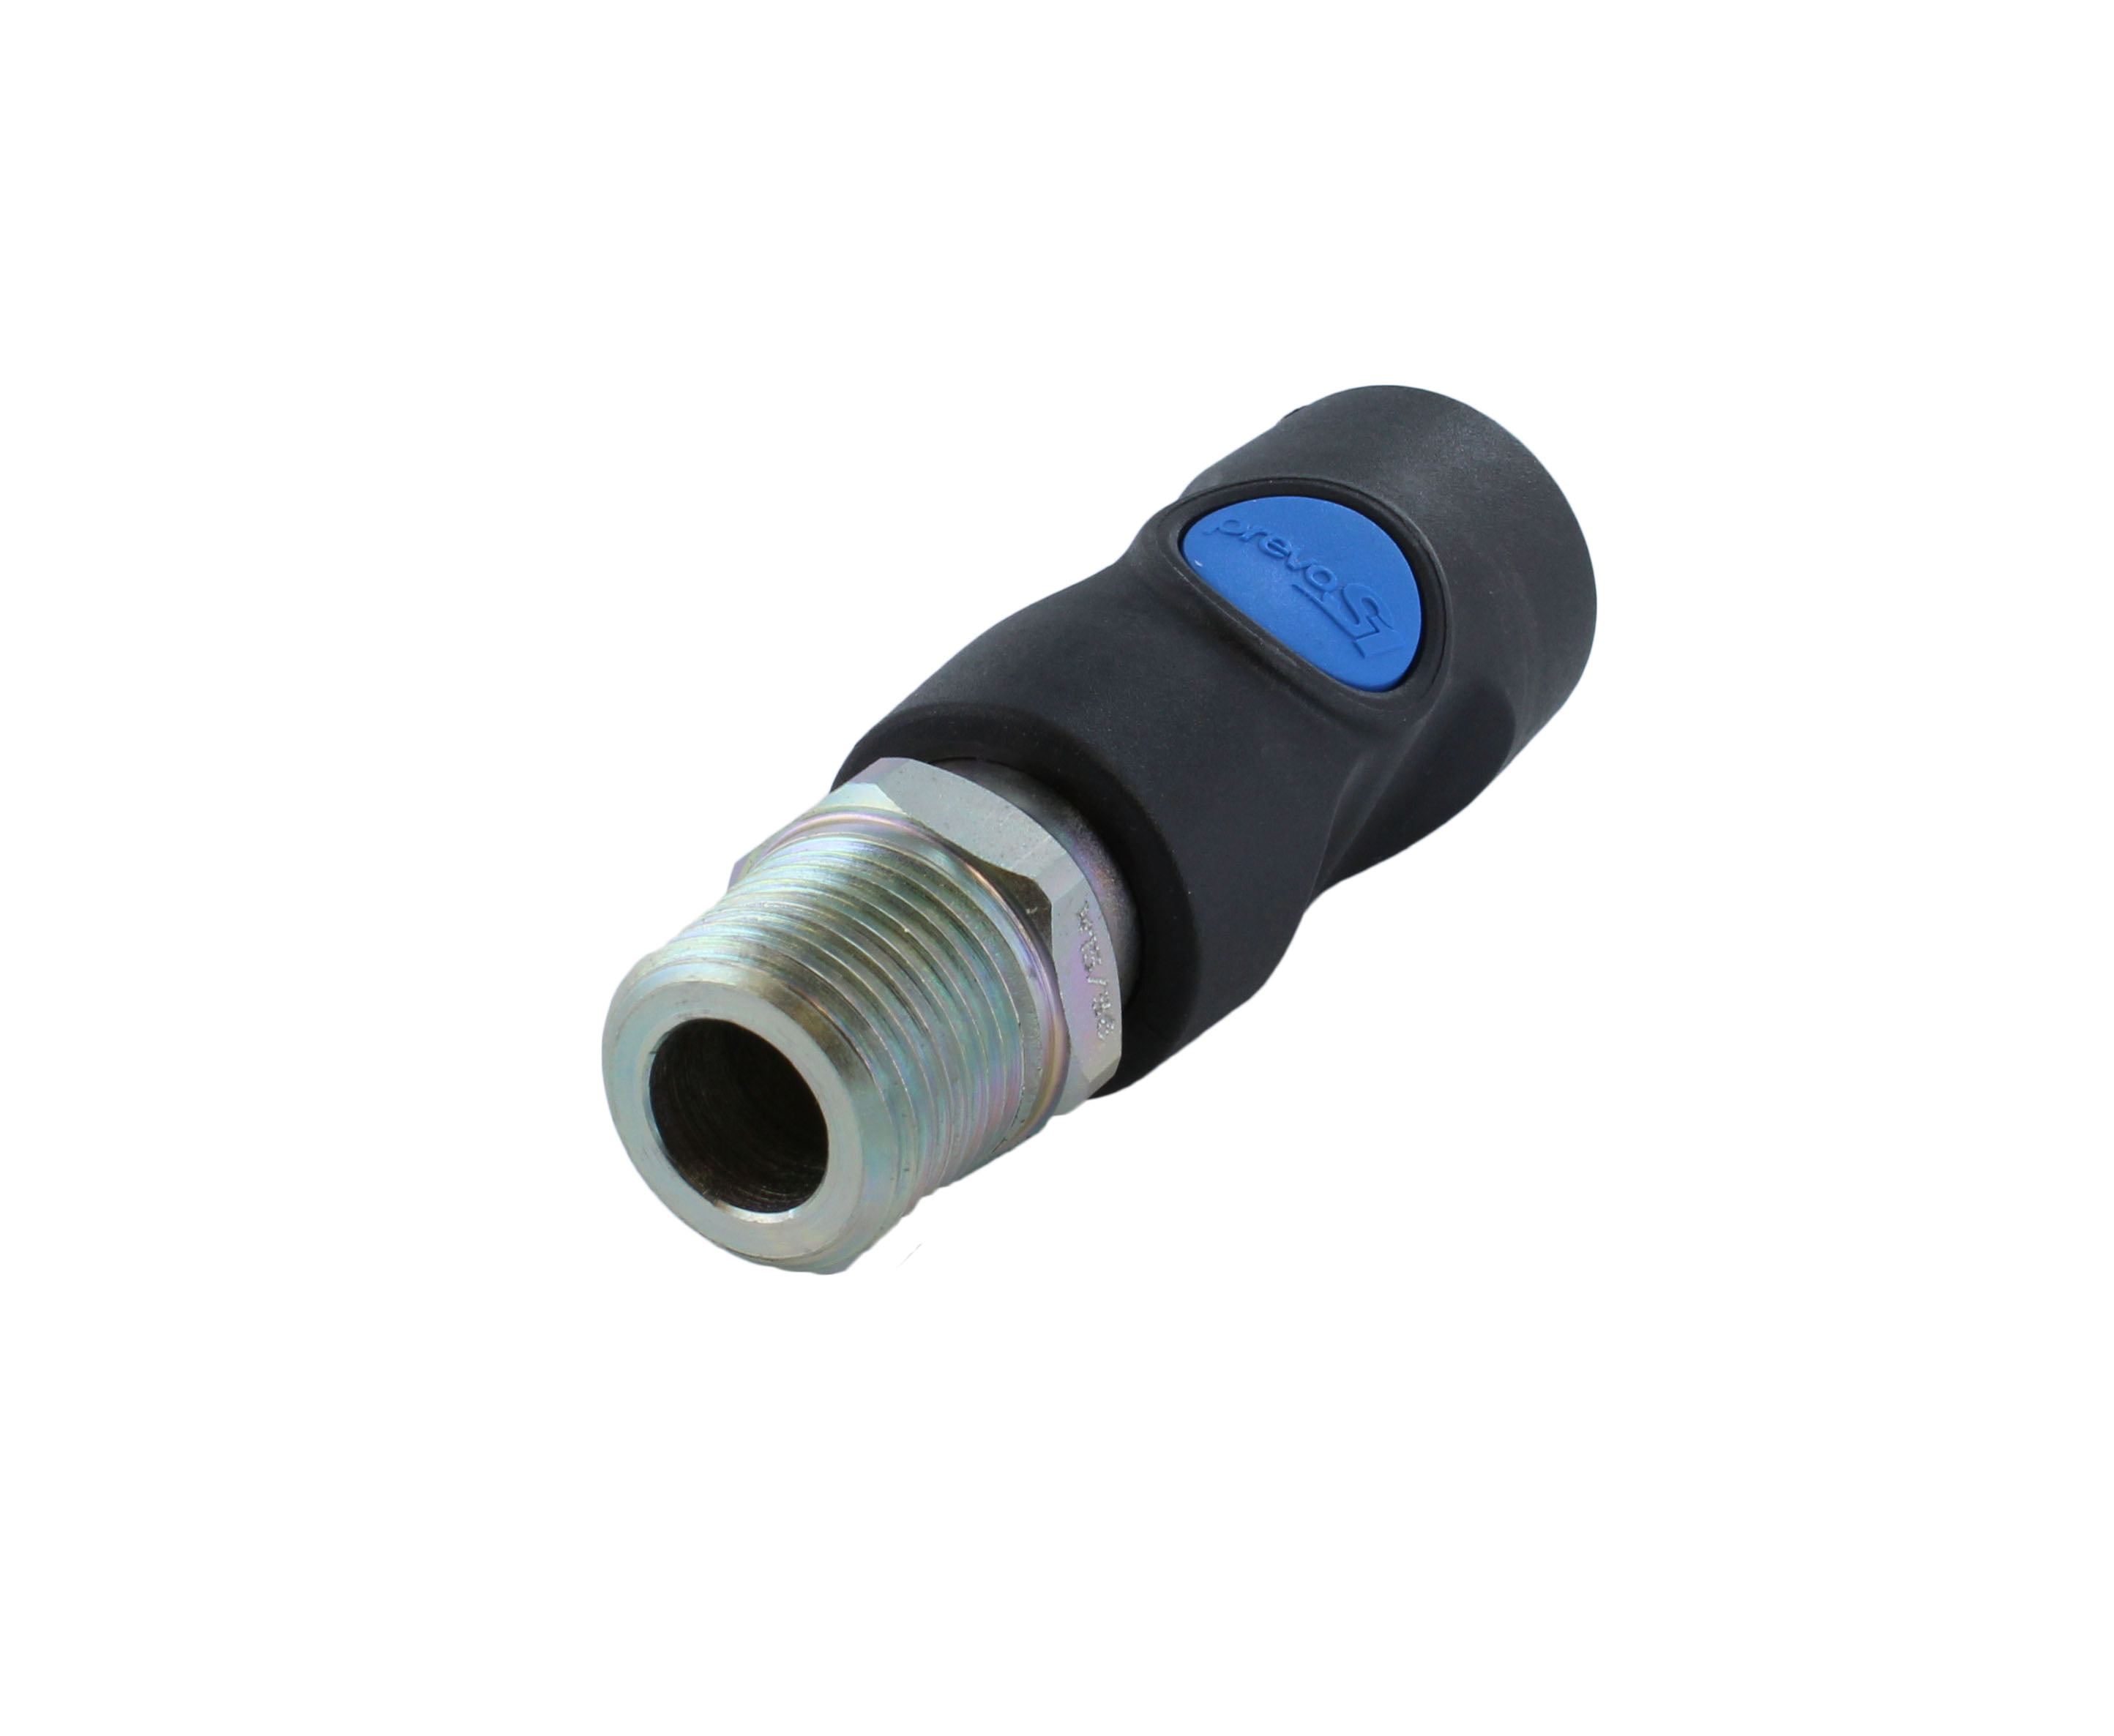 2 Pack Prevost Safety Air Plug Coupler ISI061253 1/4" 1/2" MNPT Quality Prevo S1 